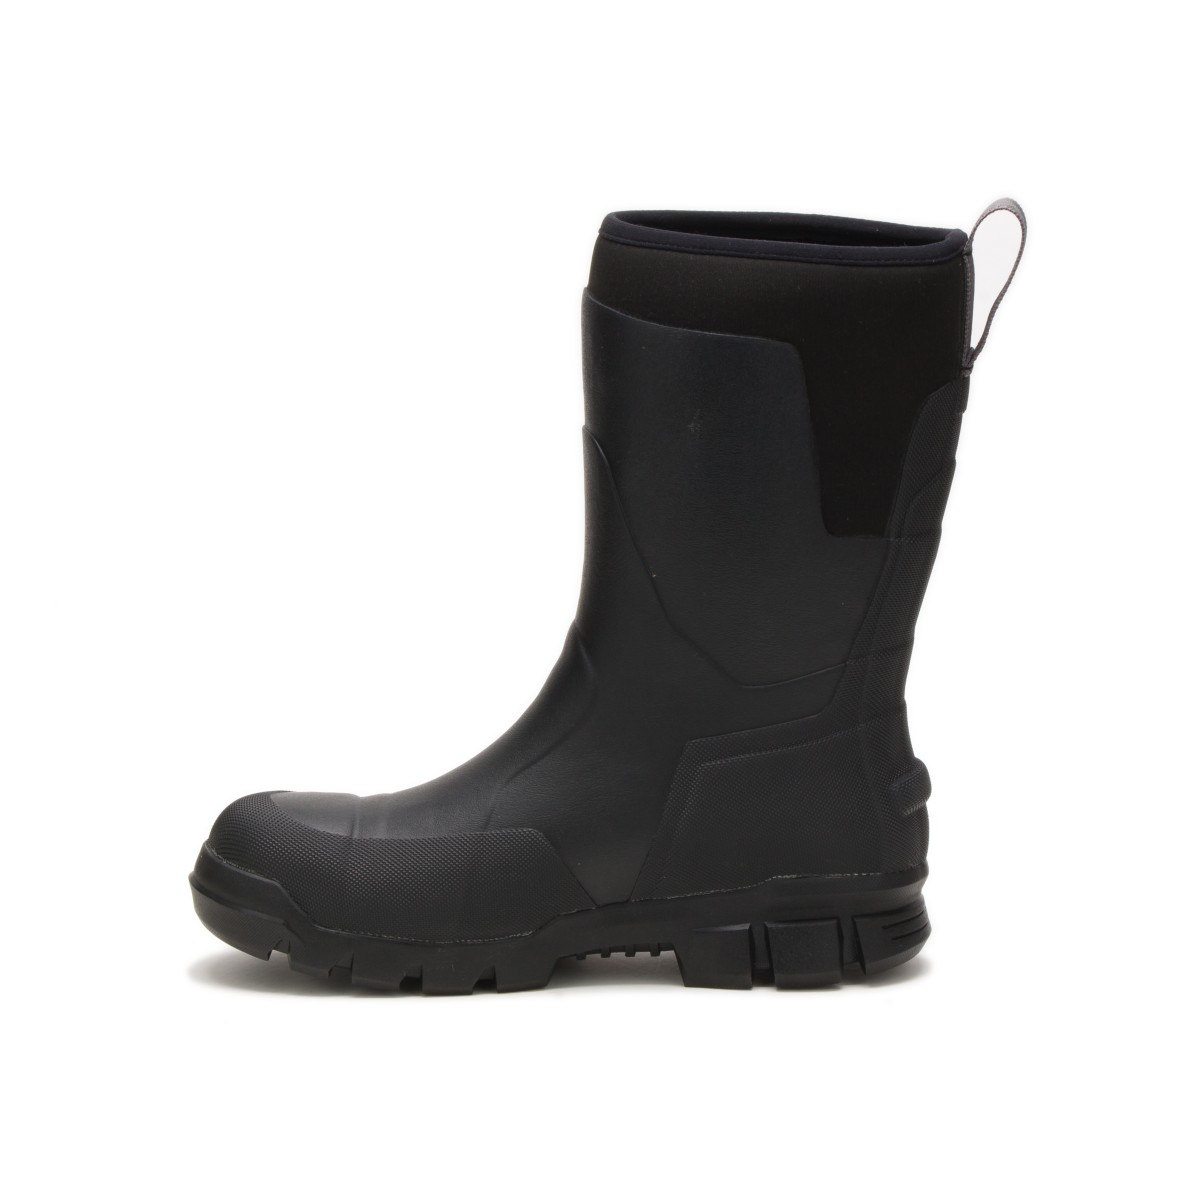 Buy > waterproof rubber boot > in stock